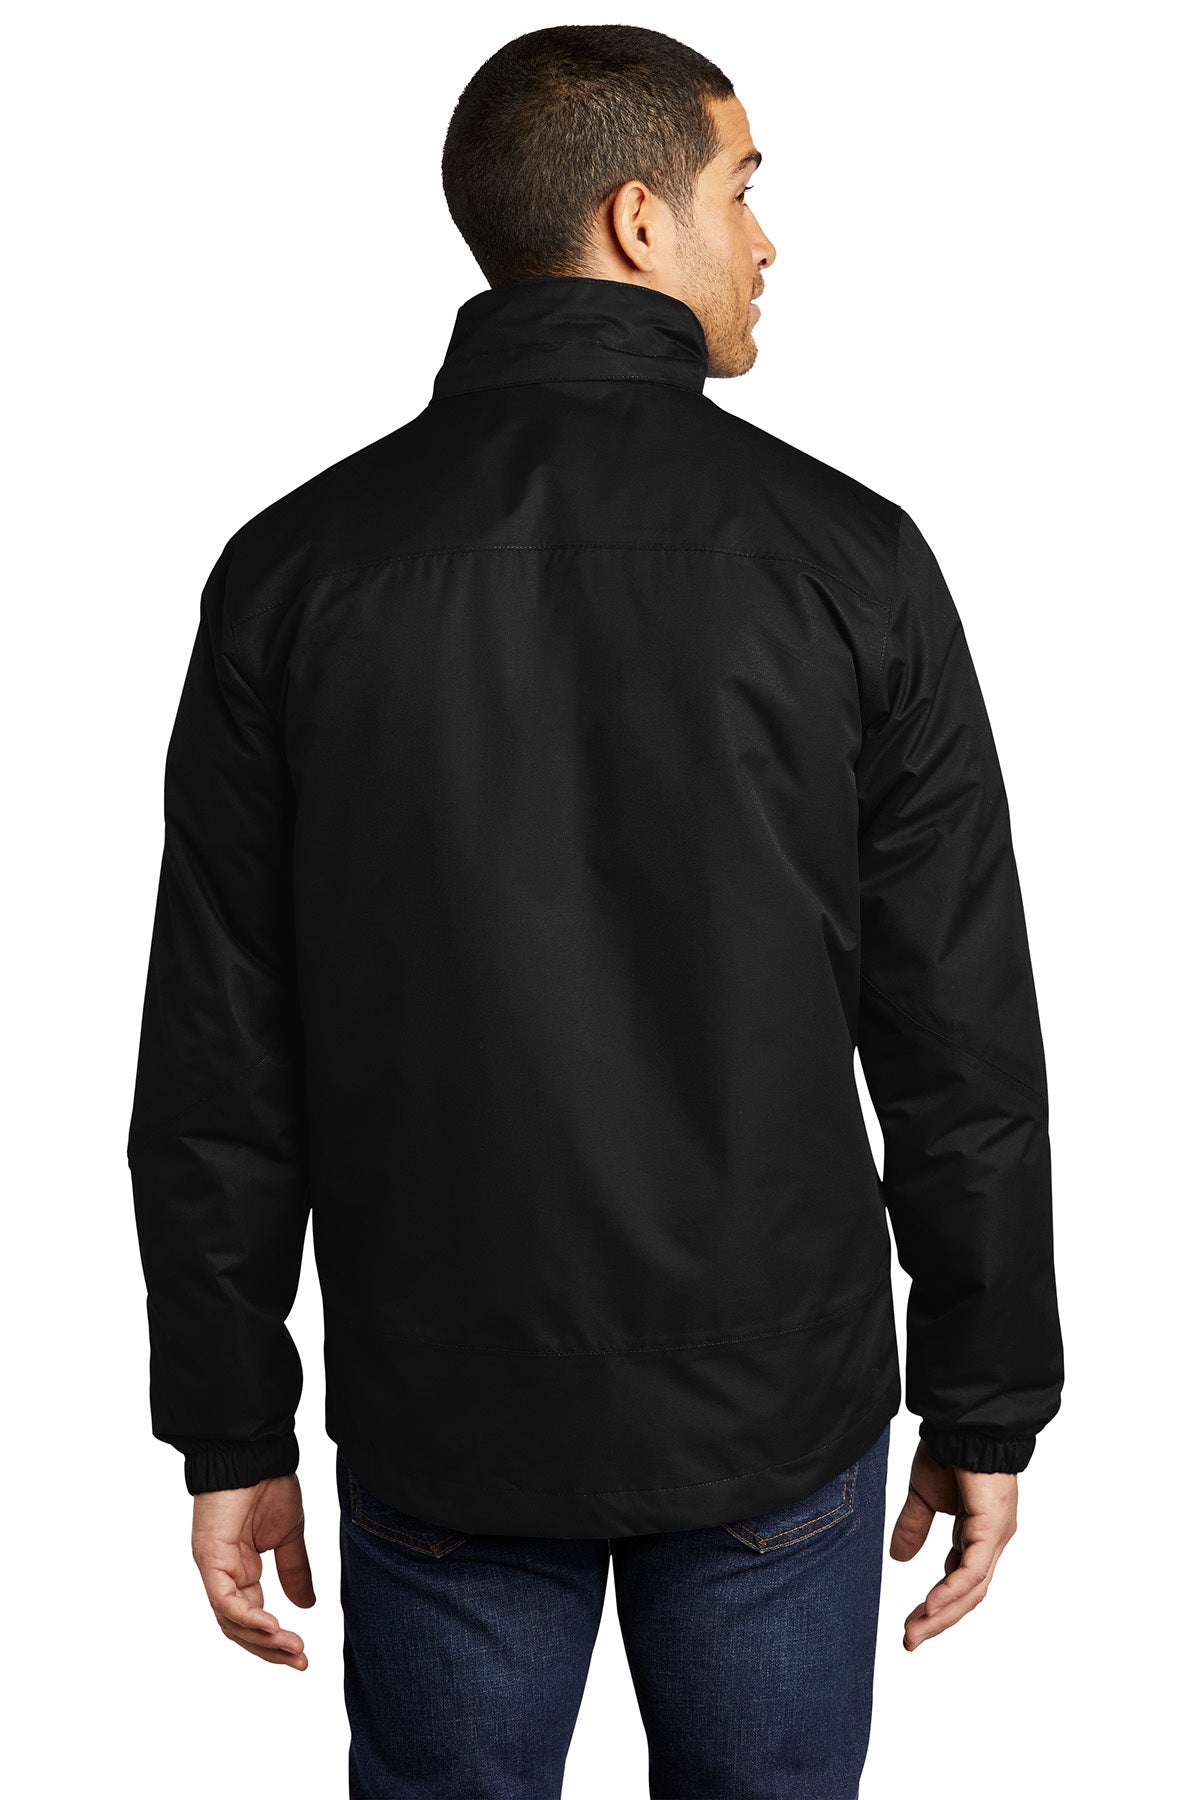 Port Authority Vortex Customized Waterproof 3-in-1 Jackets, Black/ Black